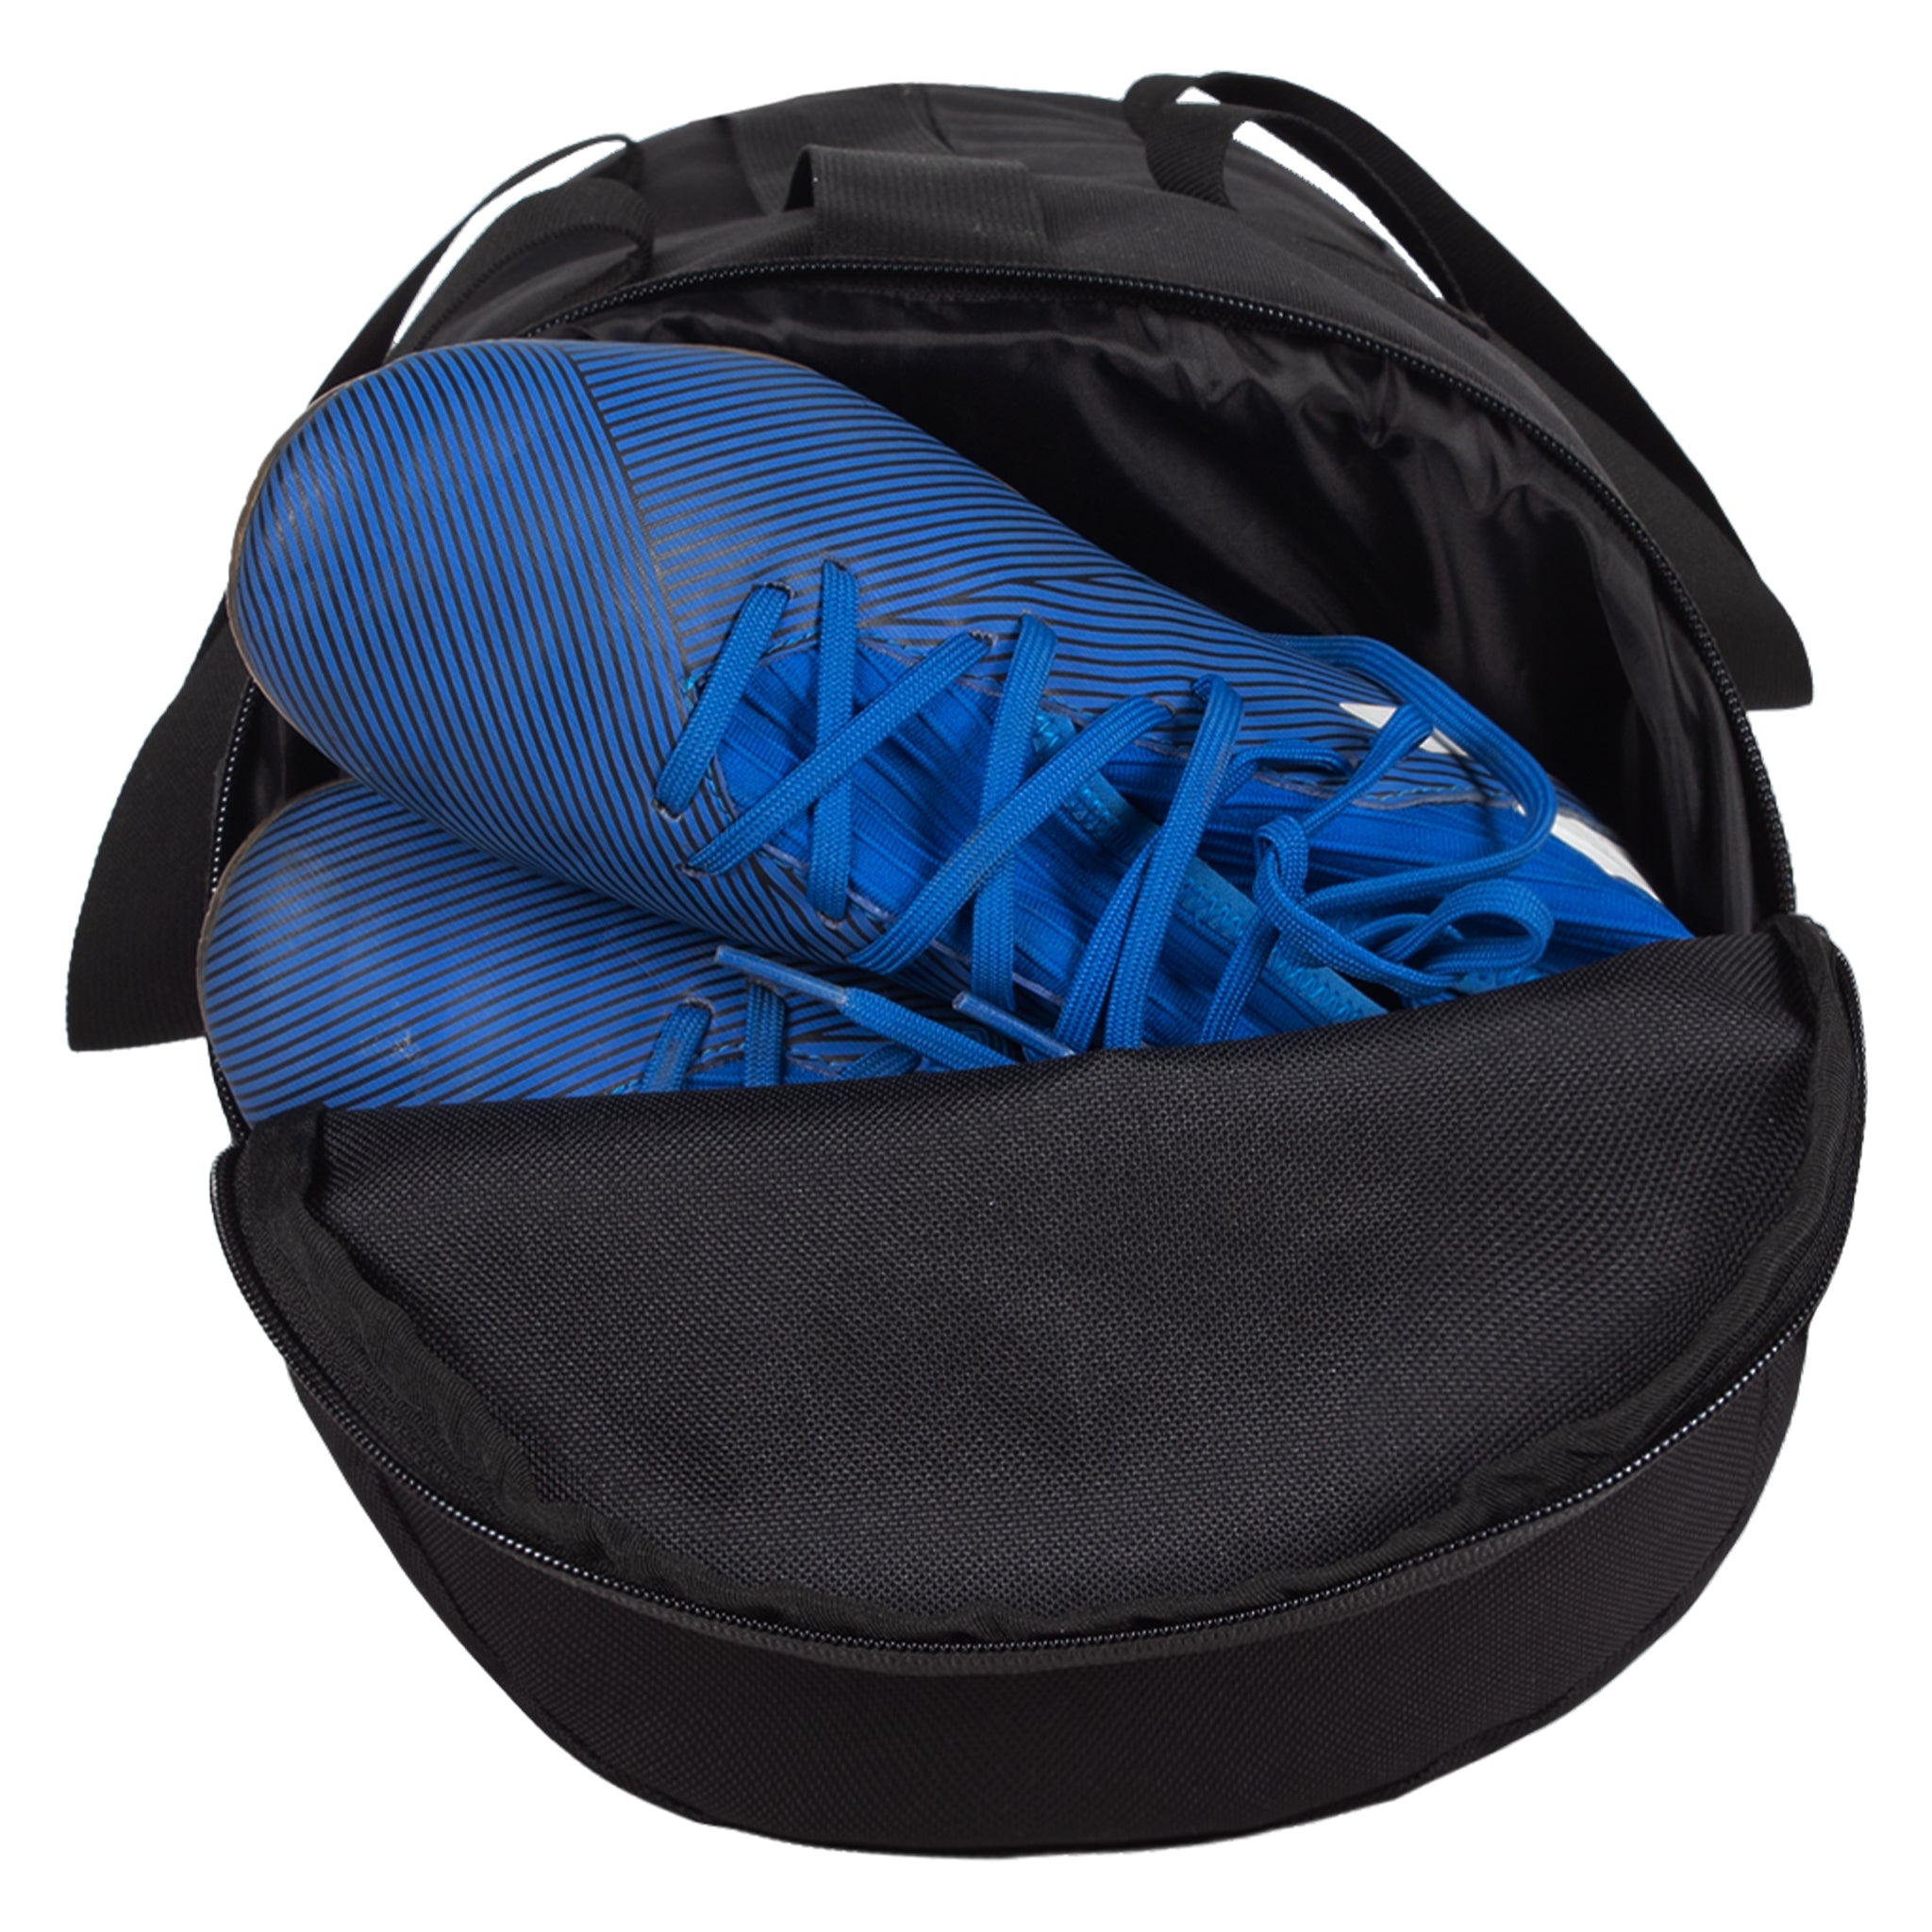 NIKE Heritage Backpack 2.0, Black/Black/White, Misc– backpacks4less.com